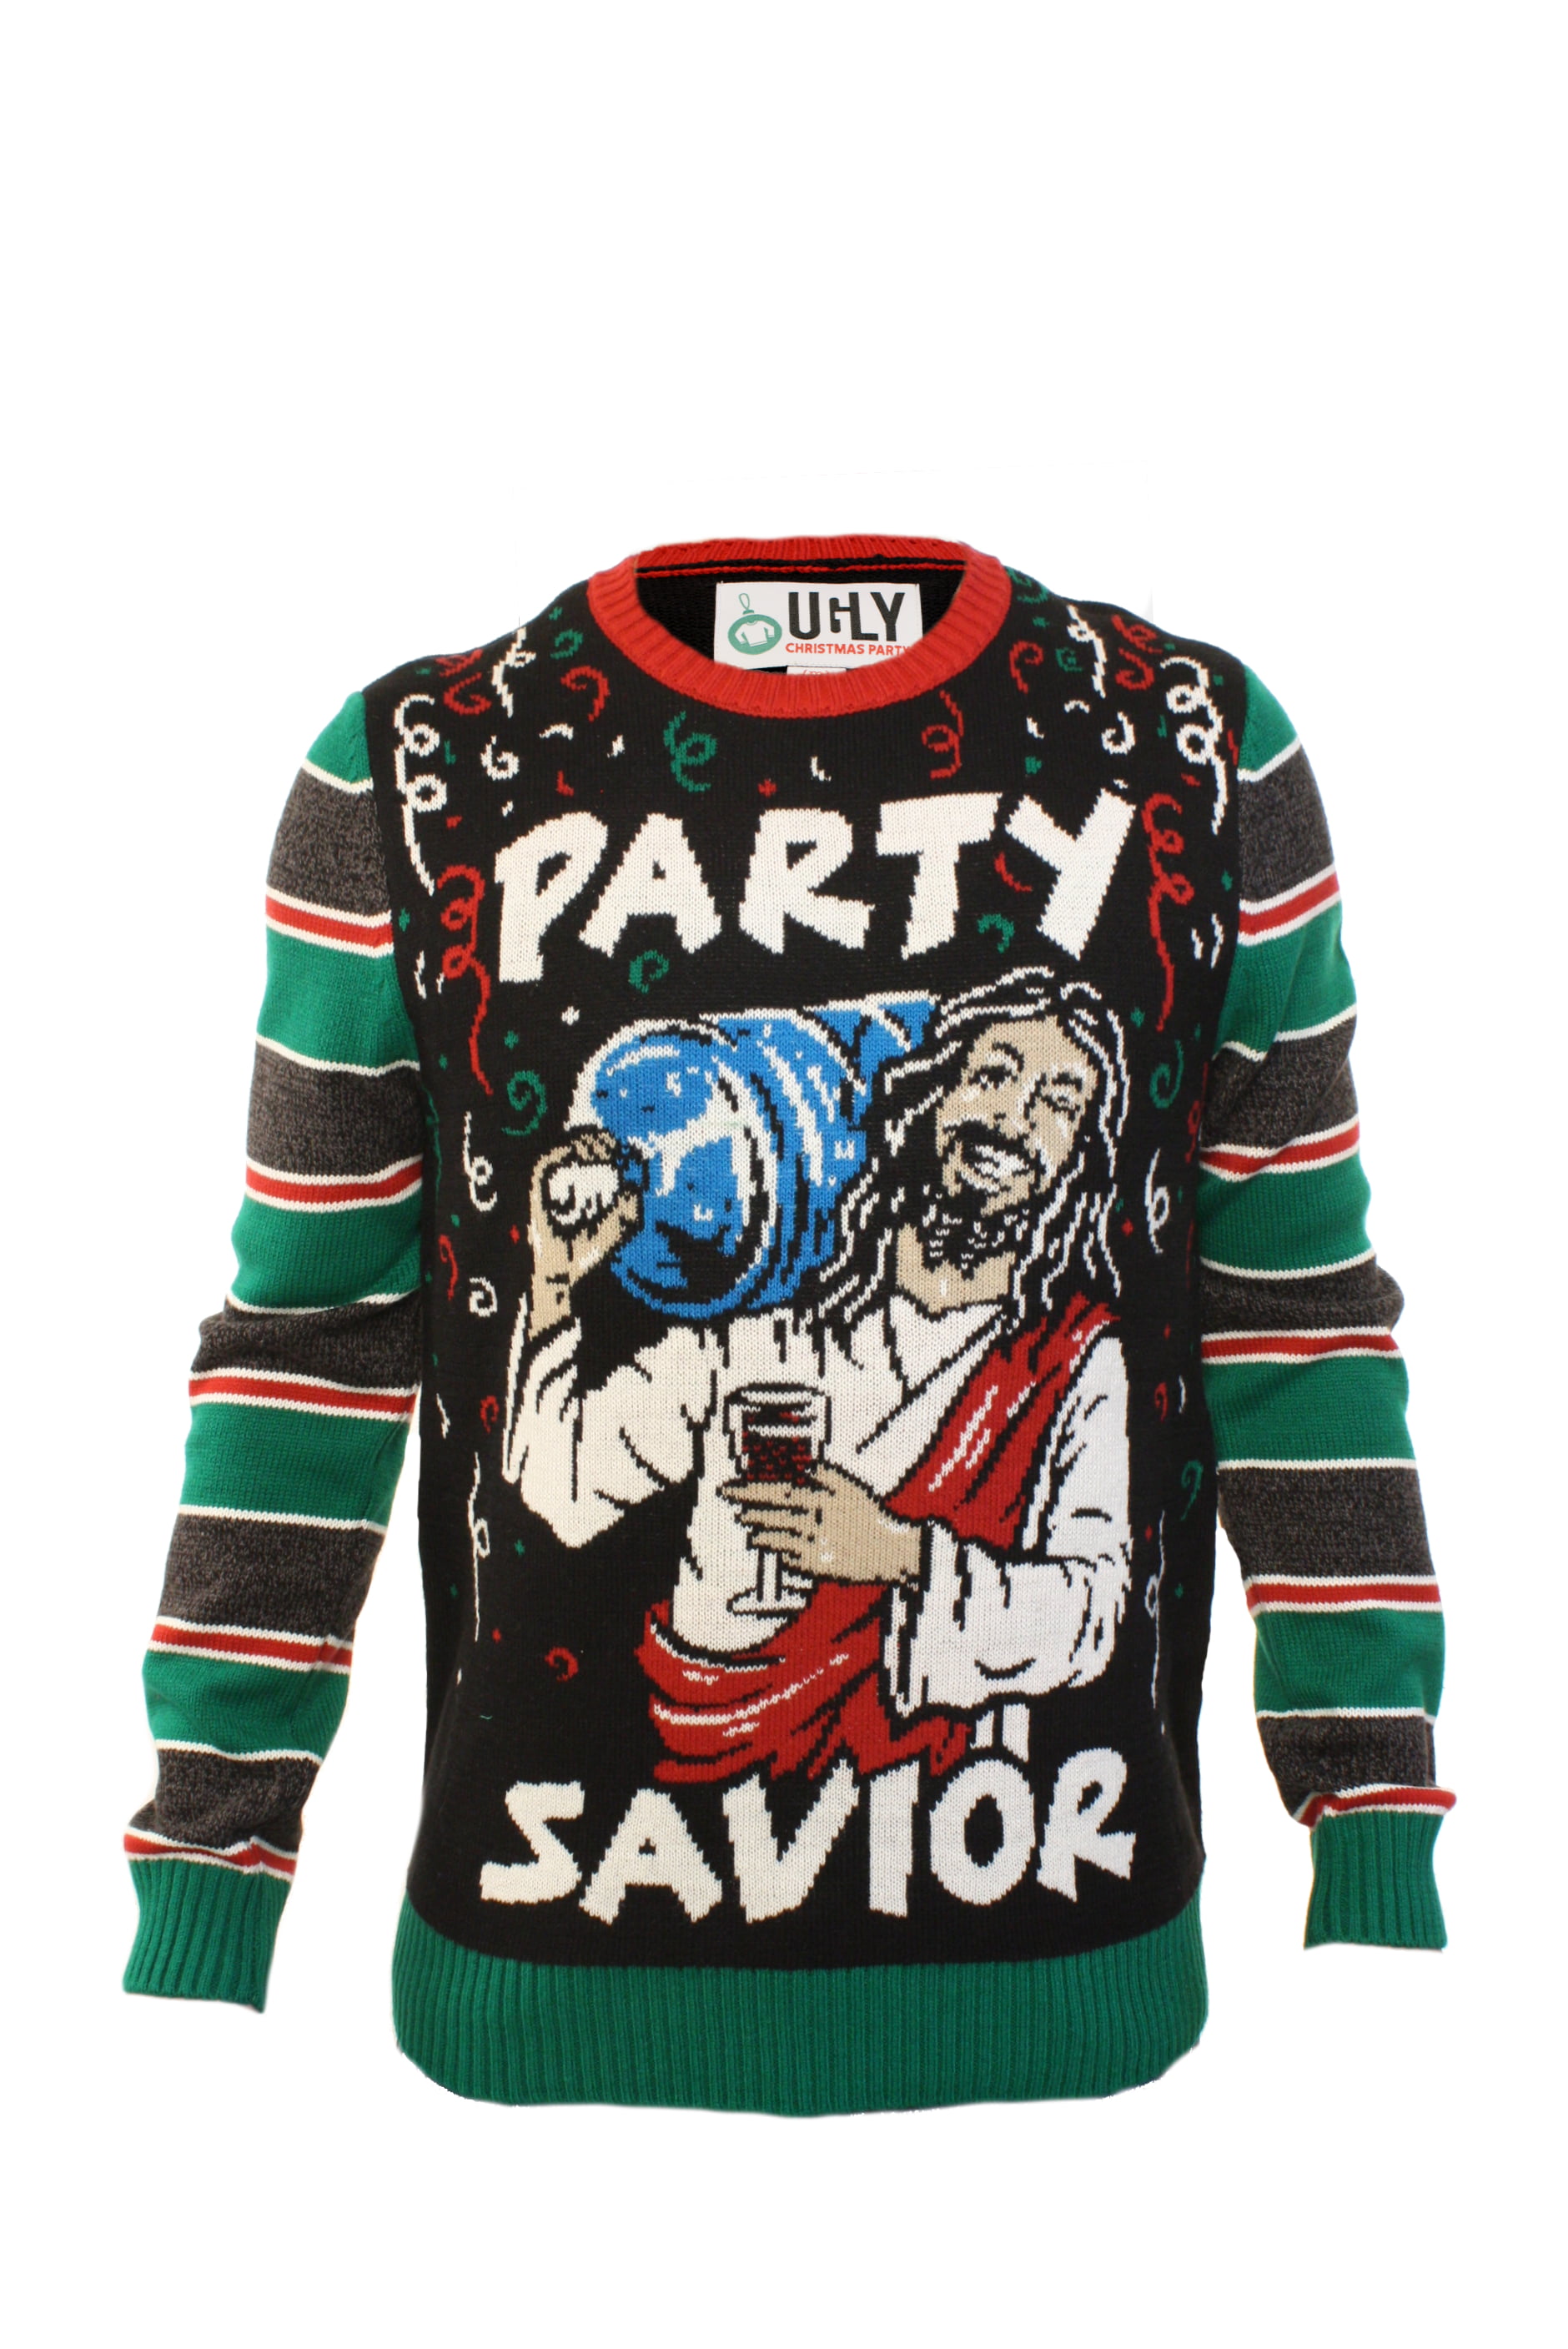 sweater jesus